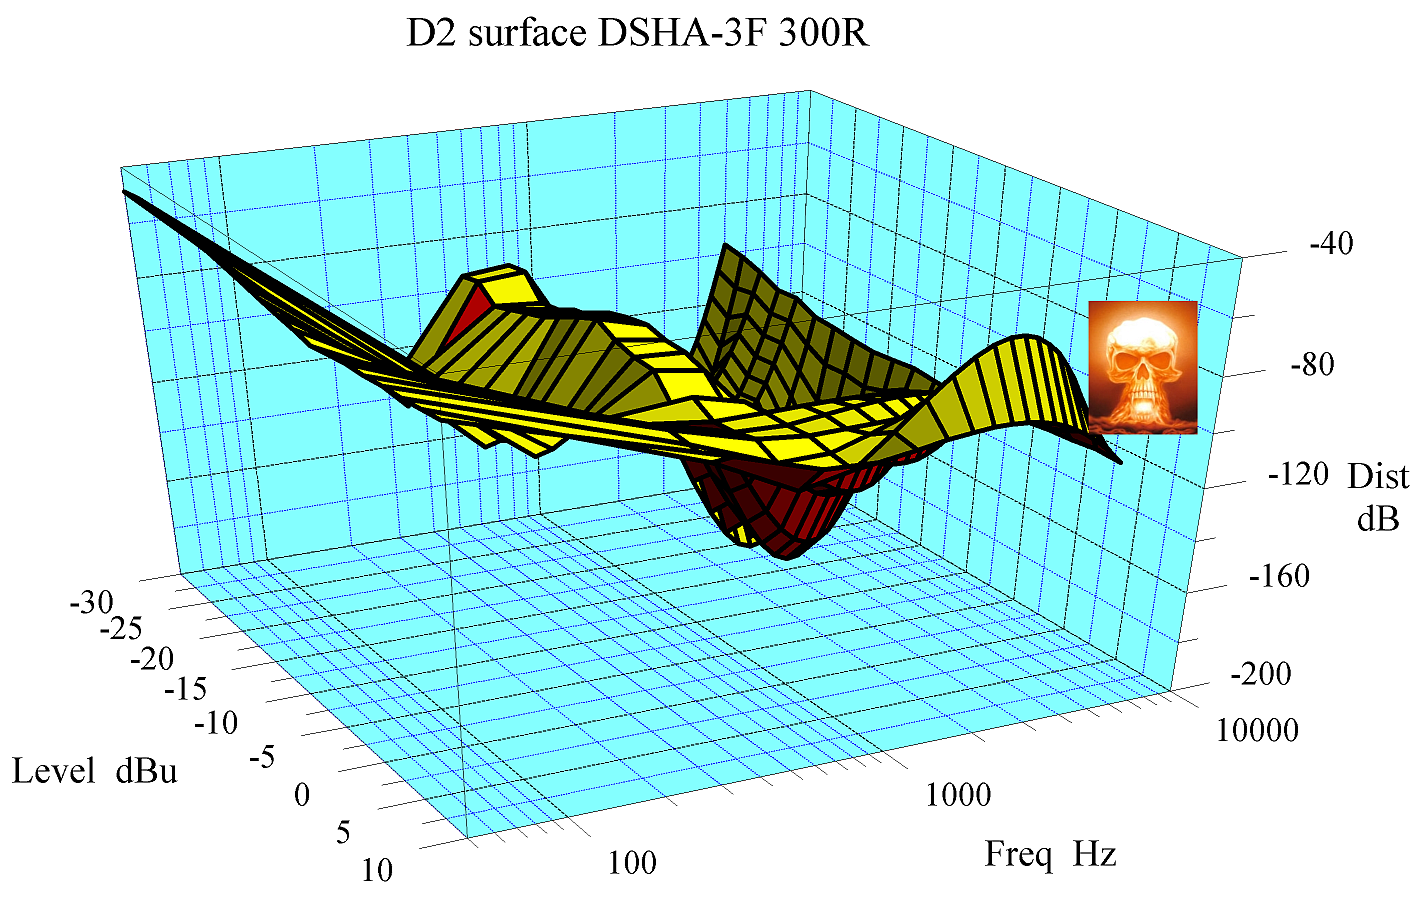 04 D2 surface DSHA-3F 300R rotated wm adj.png